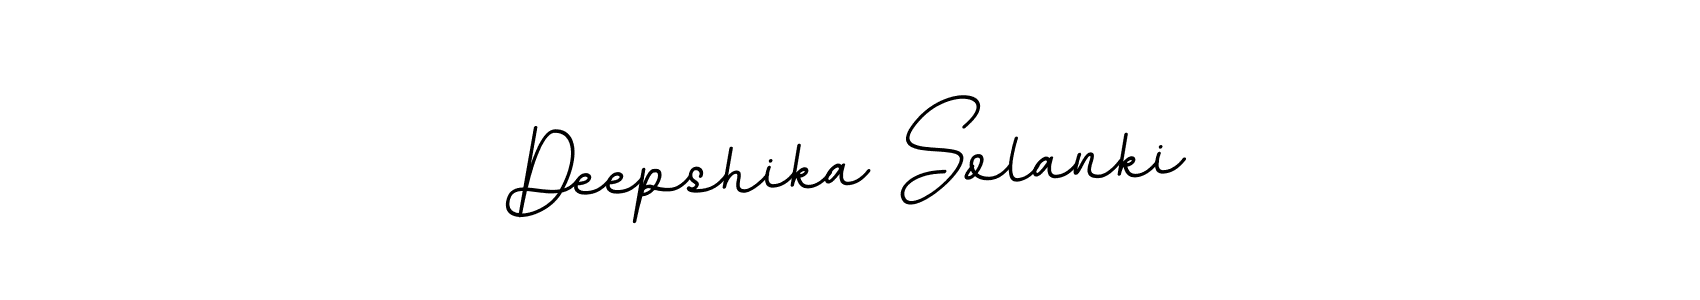 How to Draw Deepshika Solanki signature style? BallpointsItalic-DORy9 is a latest design signature styles for name Deepshika Solanki. Deepshika Solanki signature style 11 images and pictures png